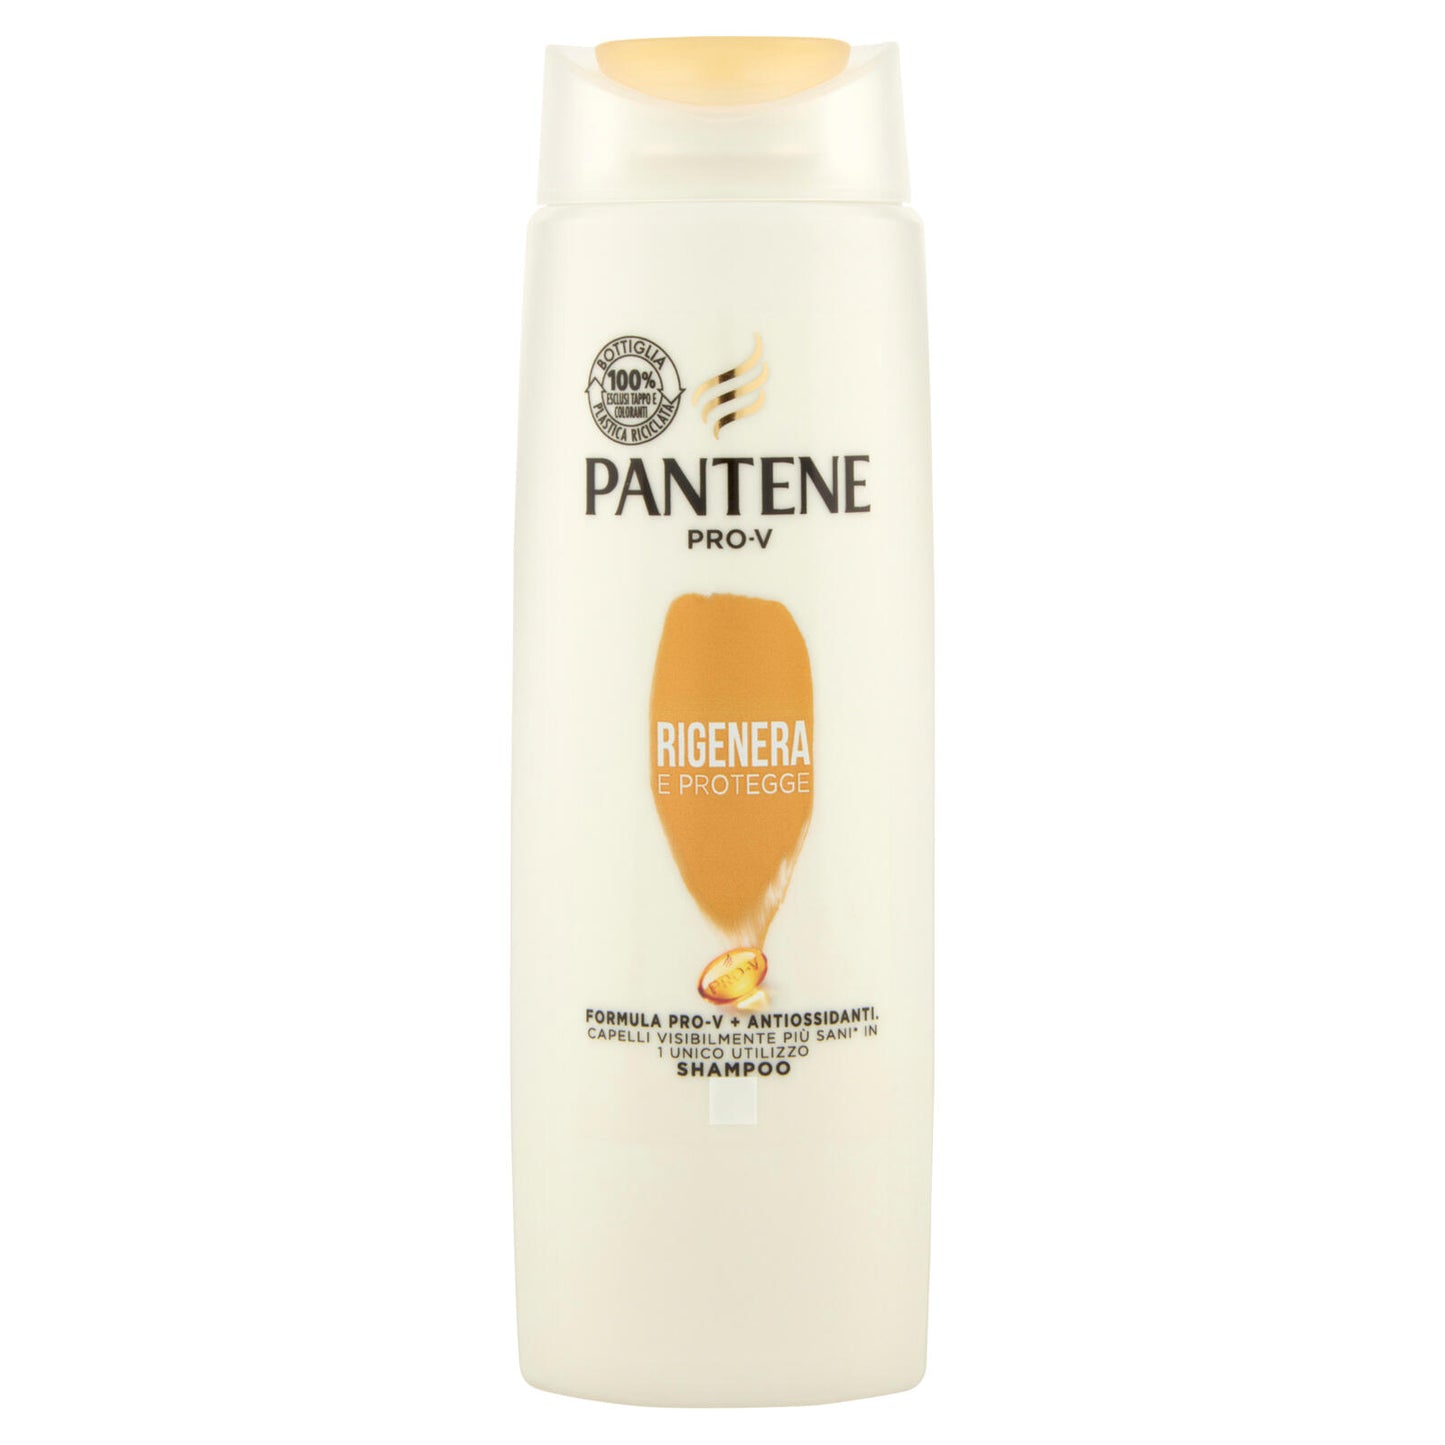 Pantene Shampoo Rigenera e Protegge 225 ml